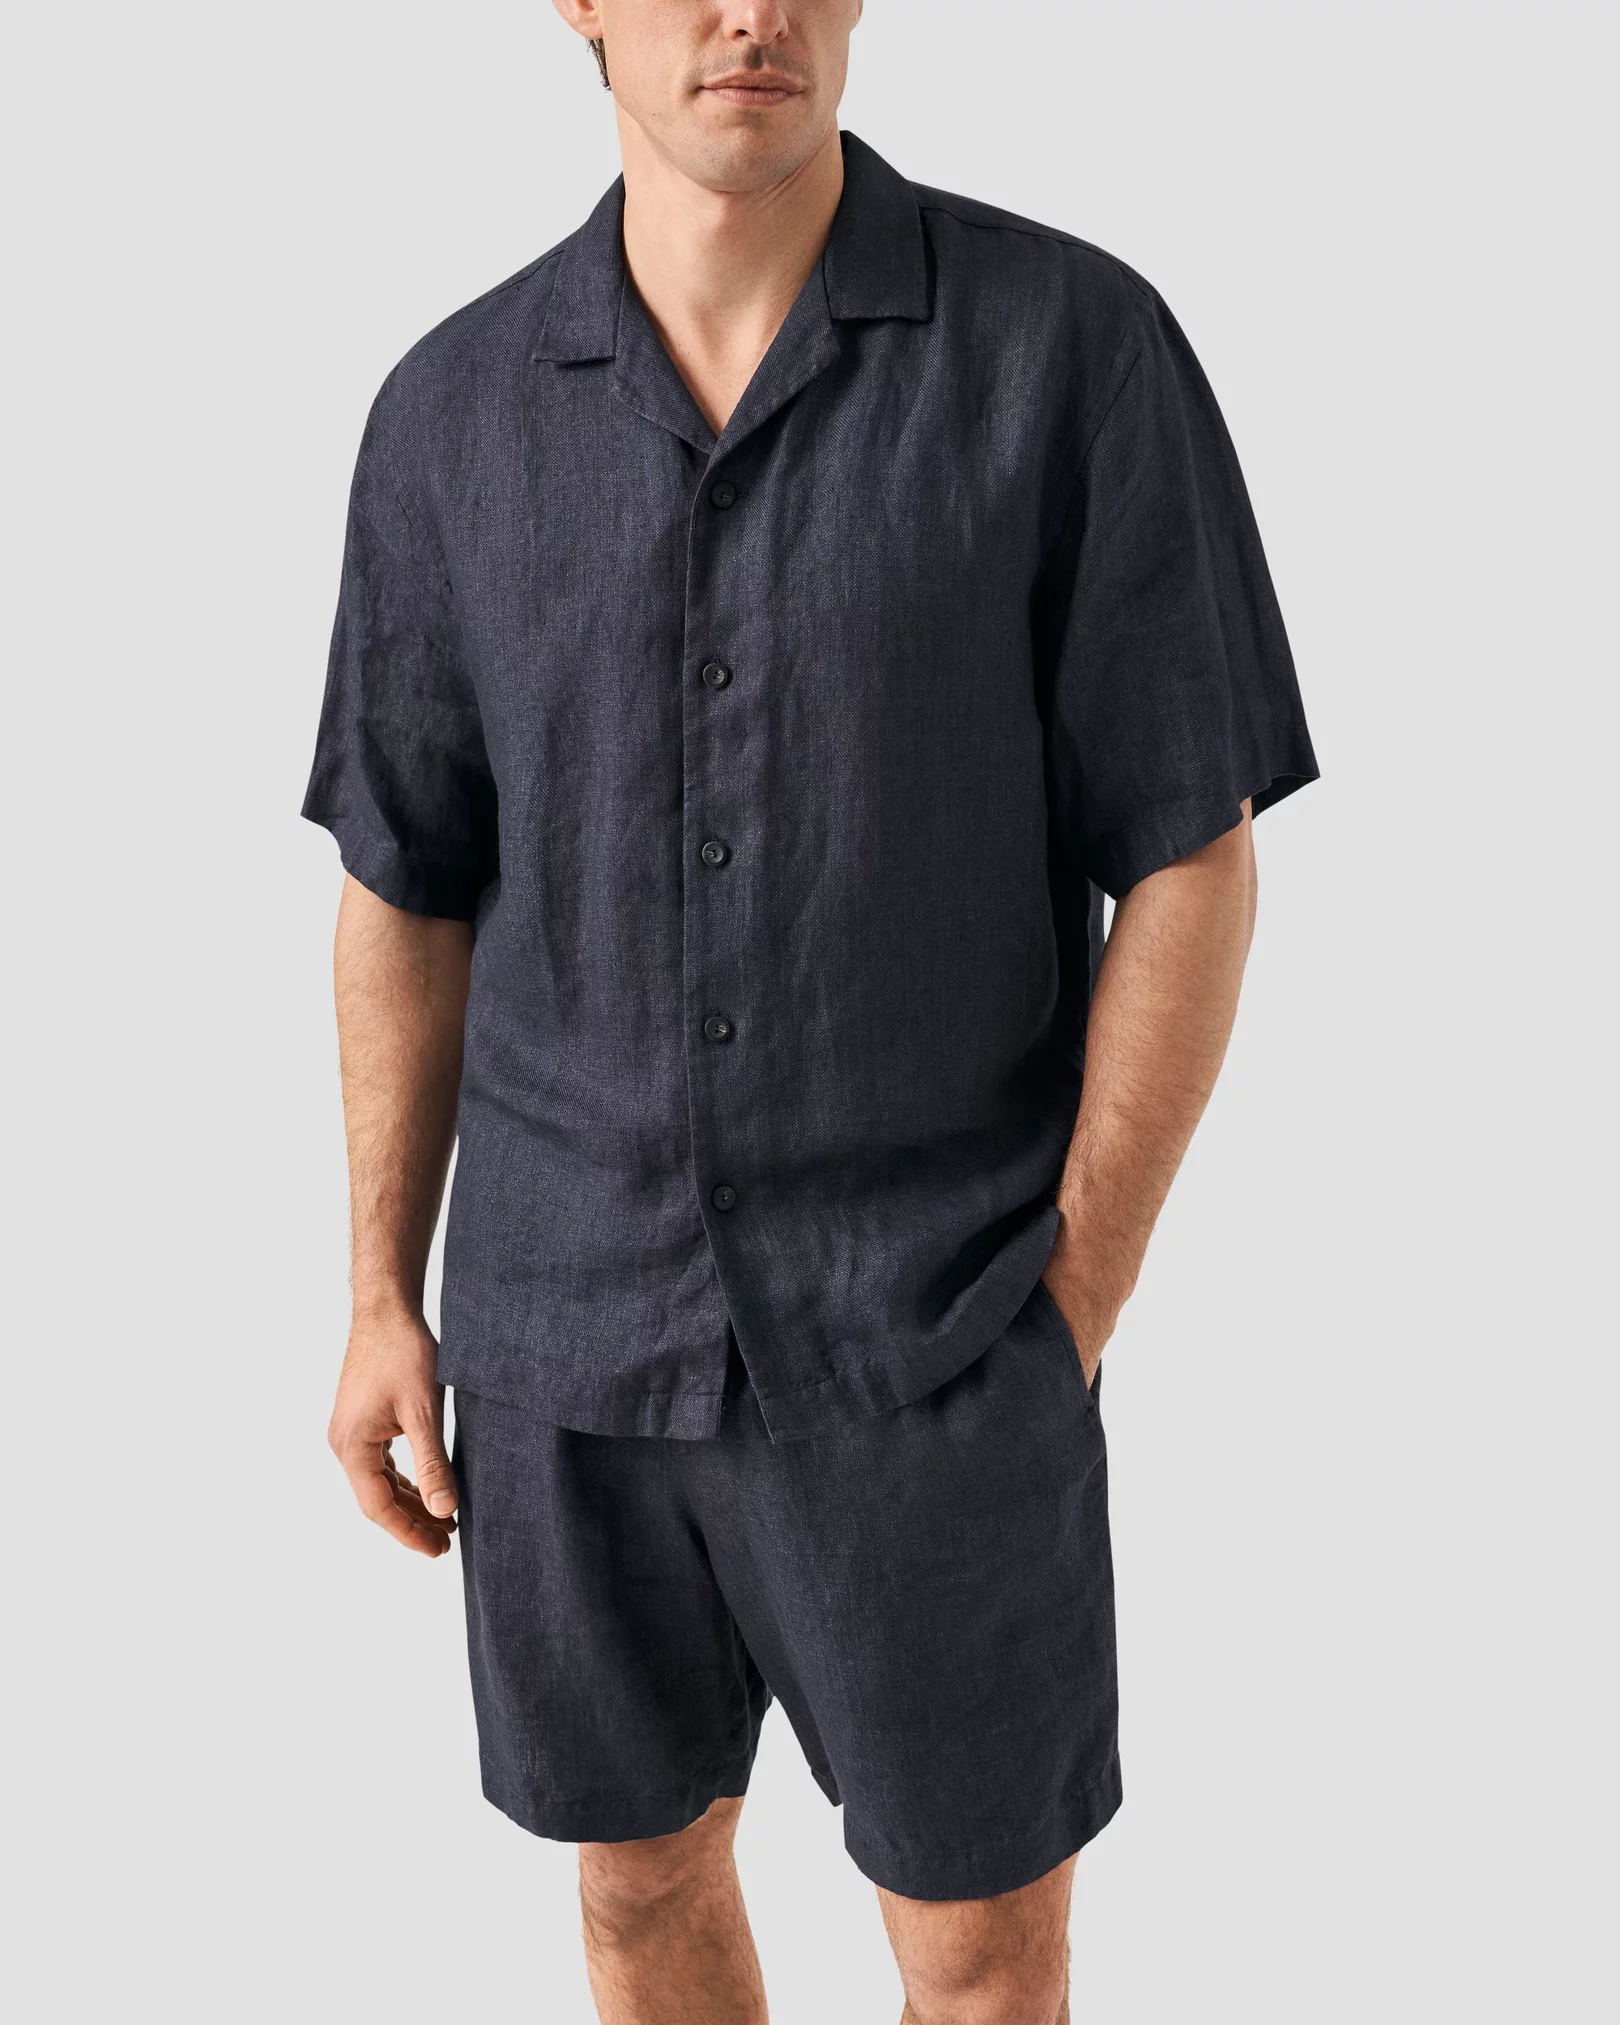 Eton - Navy Heavy Linen Resort Shirt